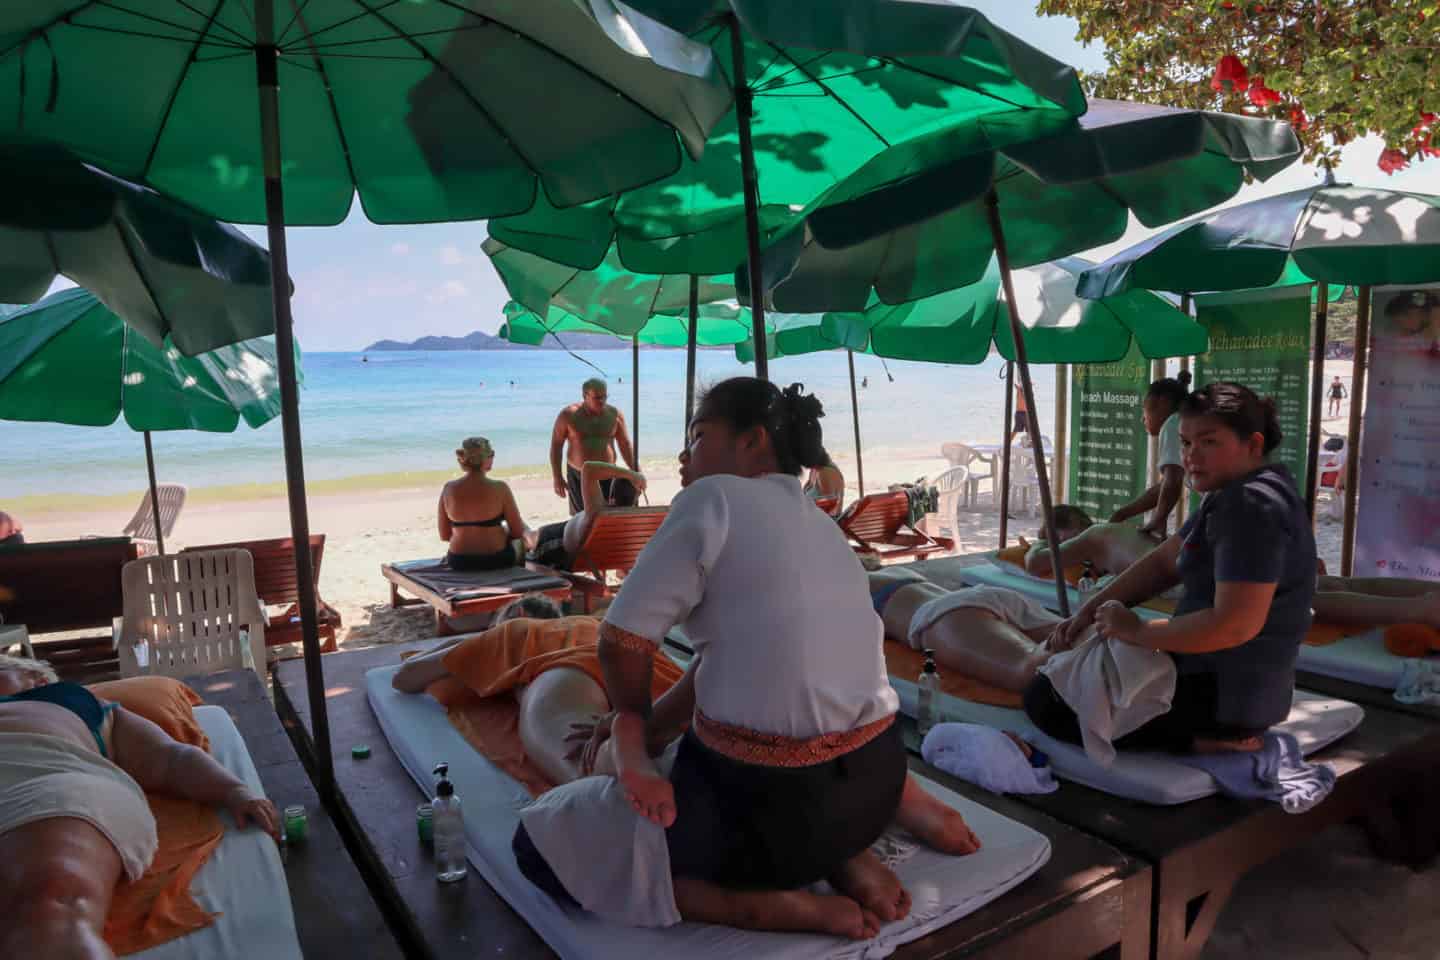 visiting koh samui on a budget massage on beach